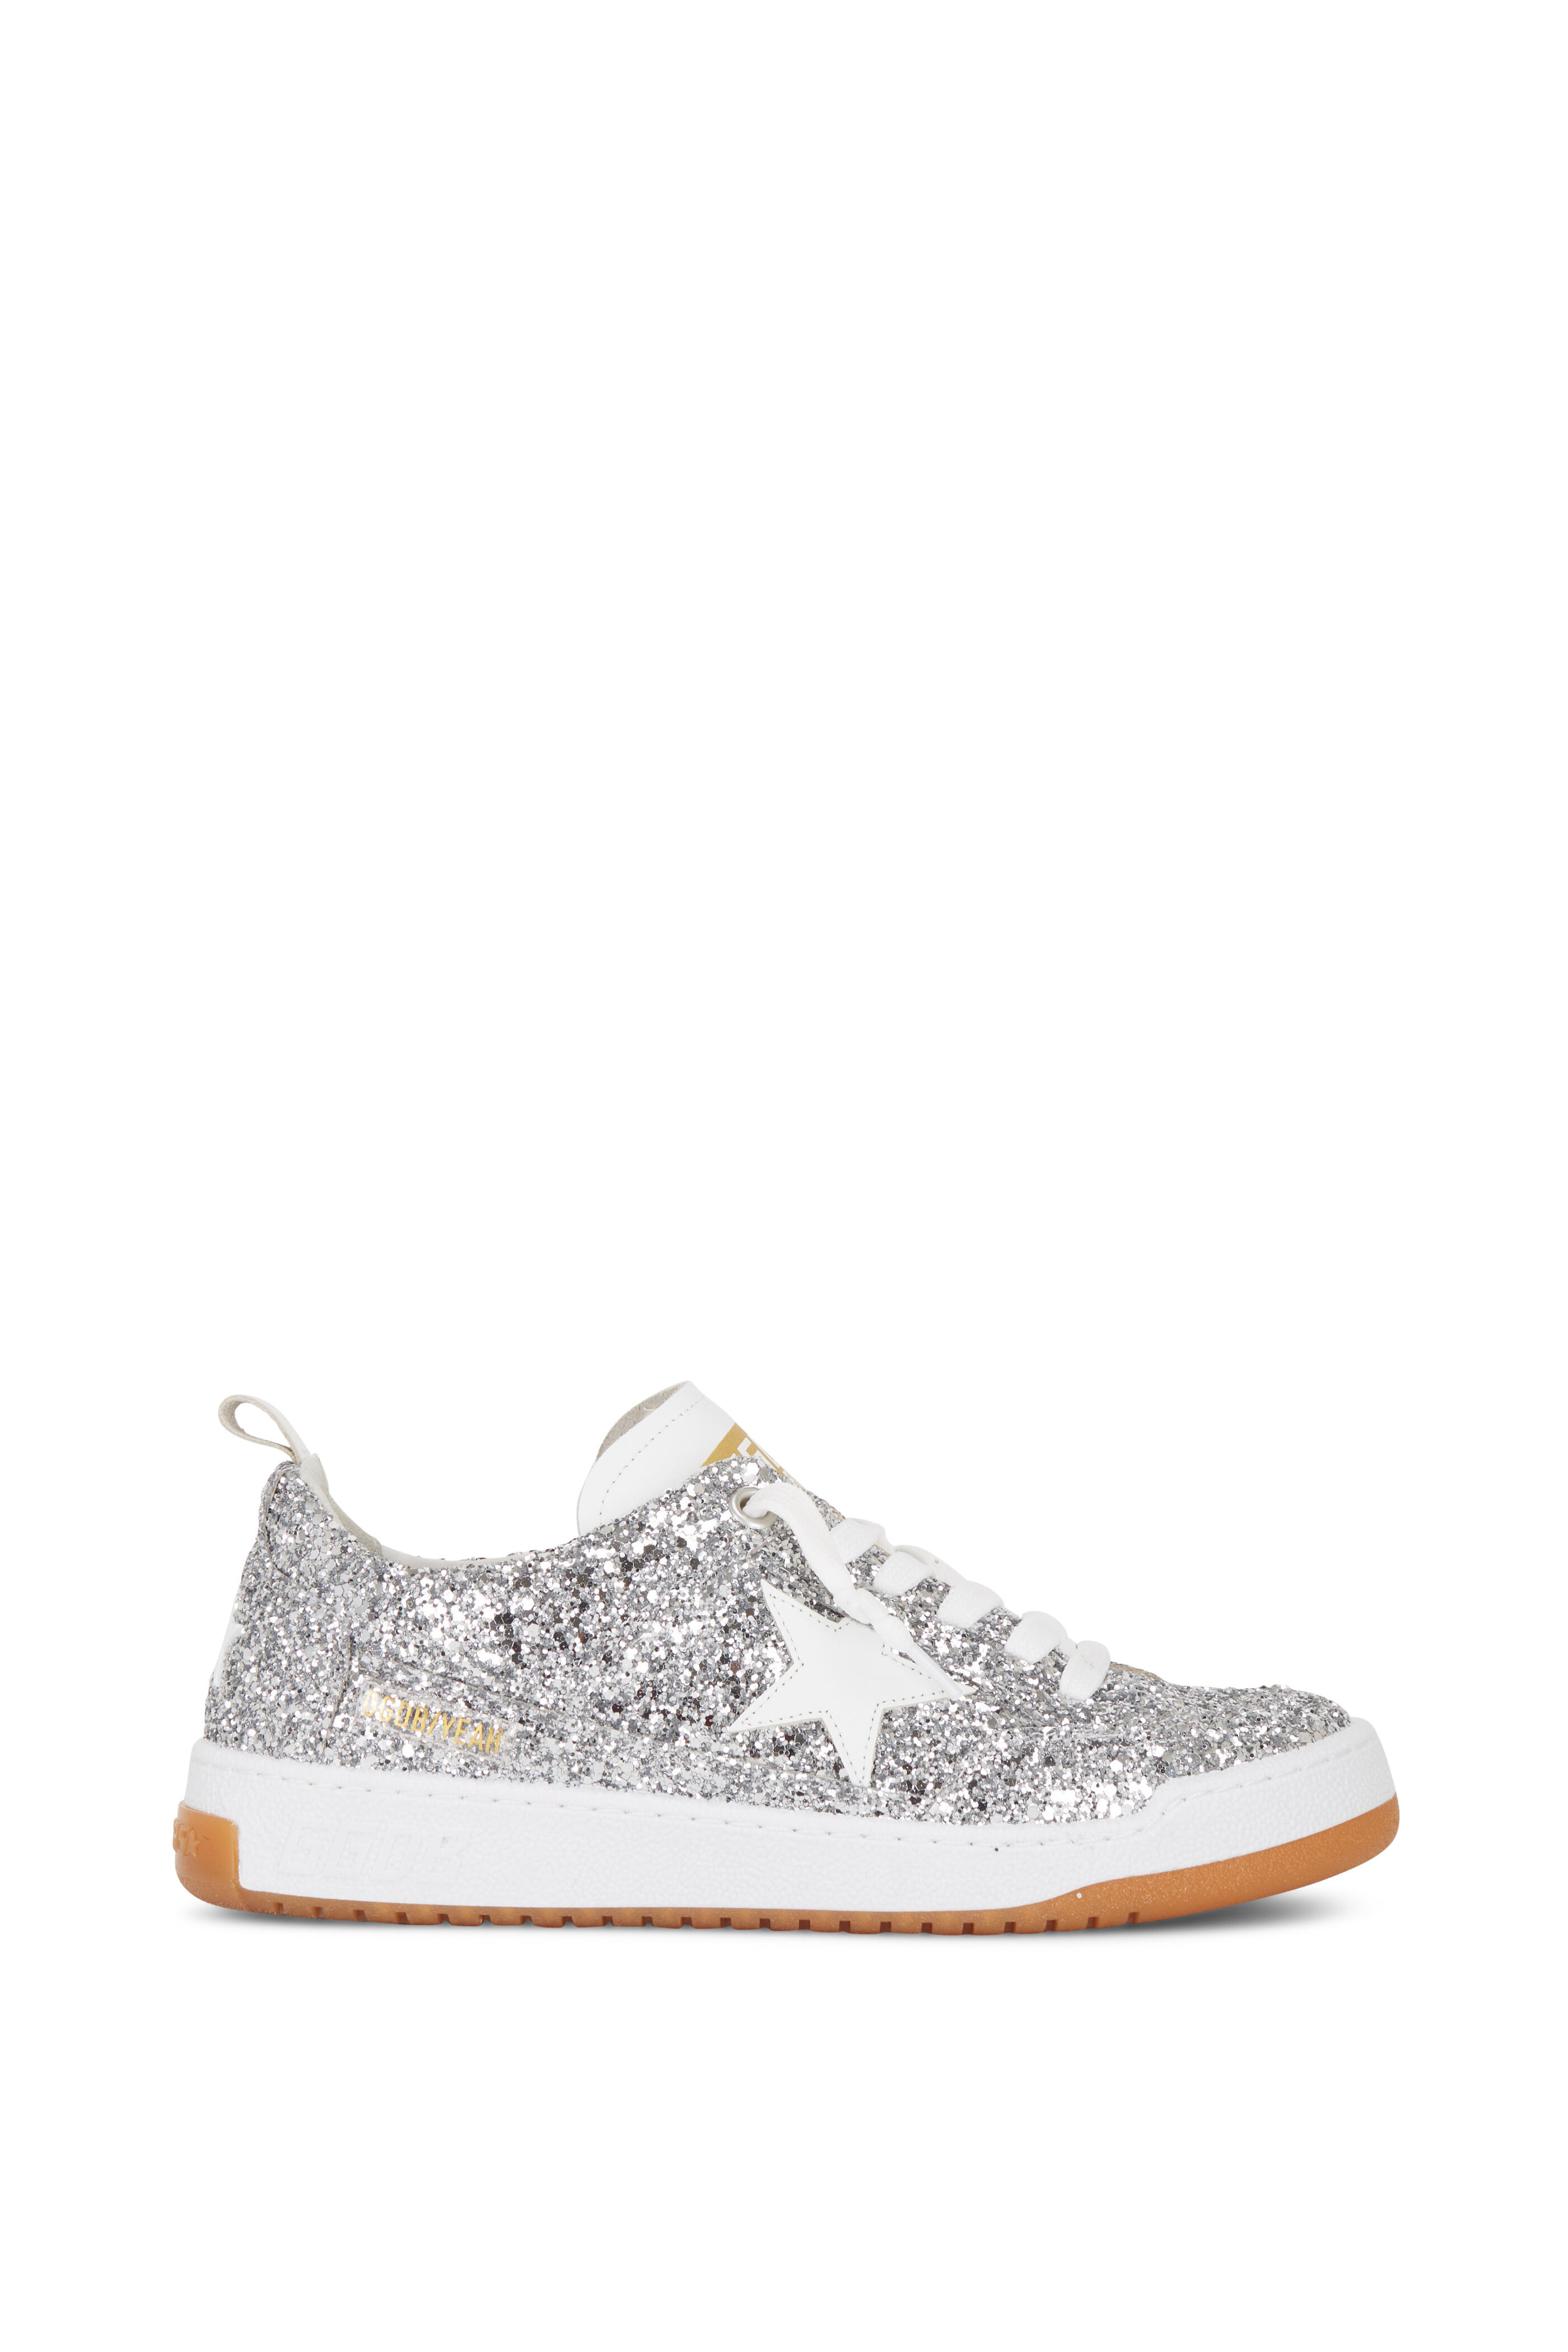 Golden Goose - Yeah! Silver Glitter & White Low-Top Sneaker